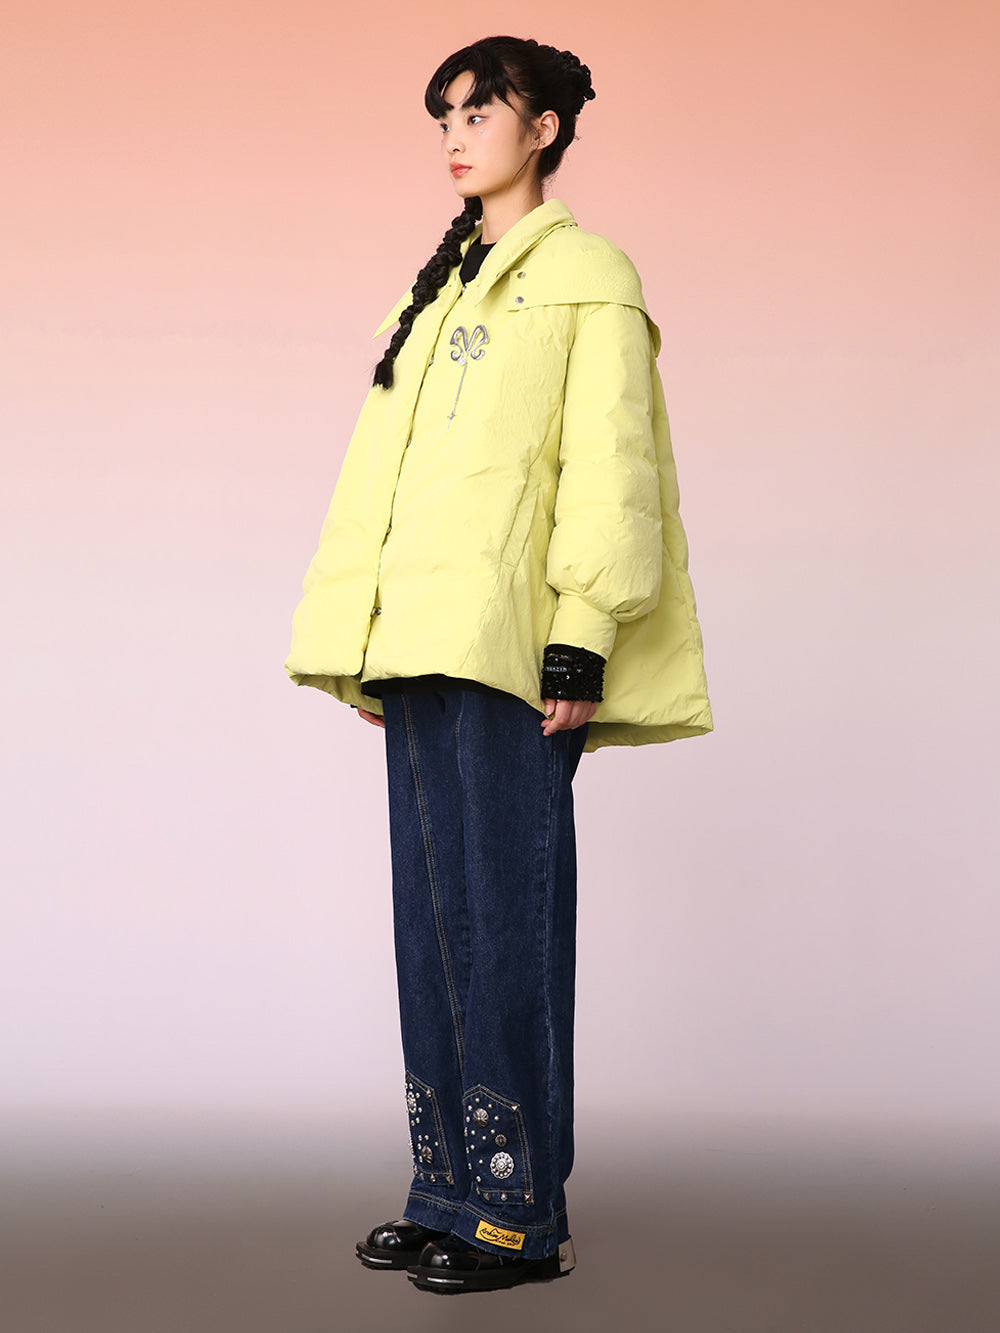 MUKZIN Cute Style A-line Yellow Down Jacket